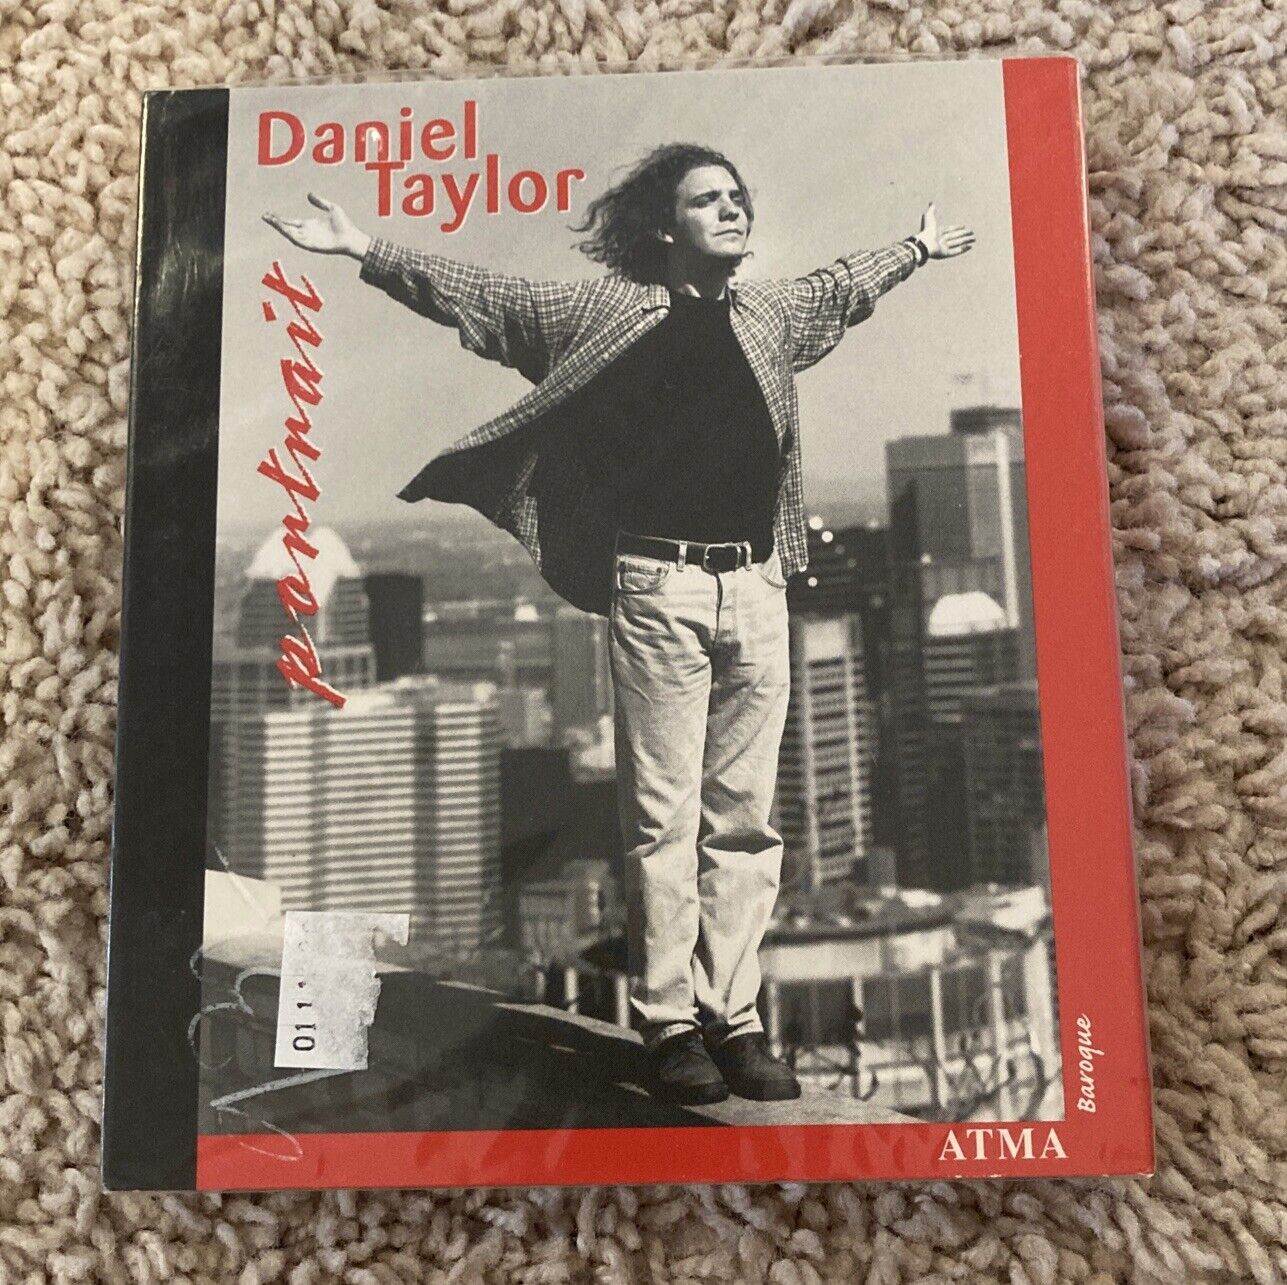 Daniel Taylor - Portrait - CD - Brand New Sealed